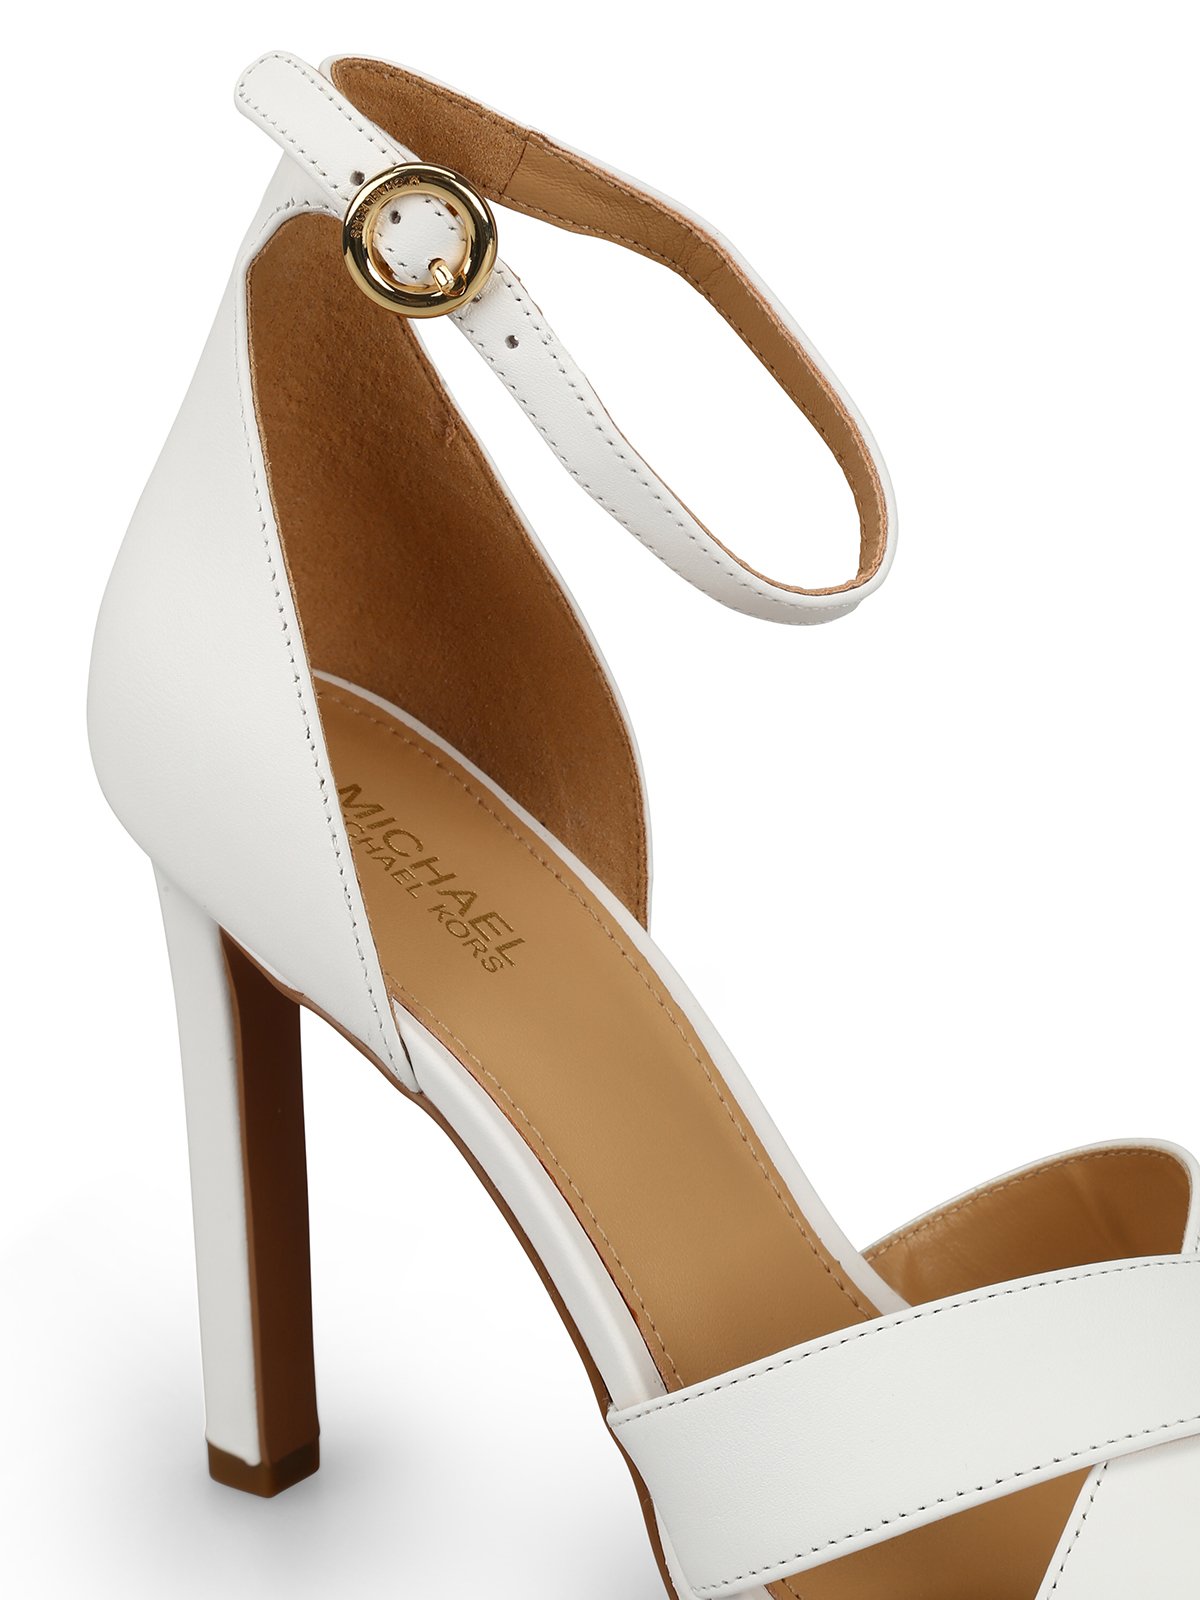 Sandals Michael Kors - Alexia white sandals - 40S9AXHA1L085 